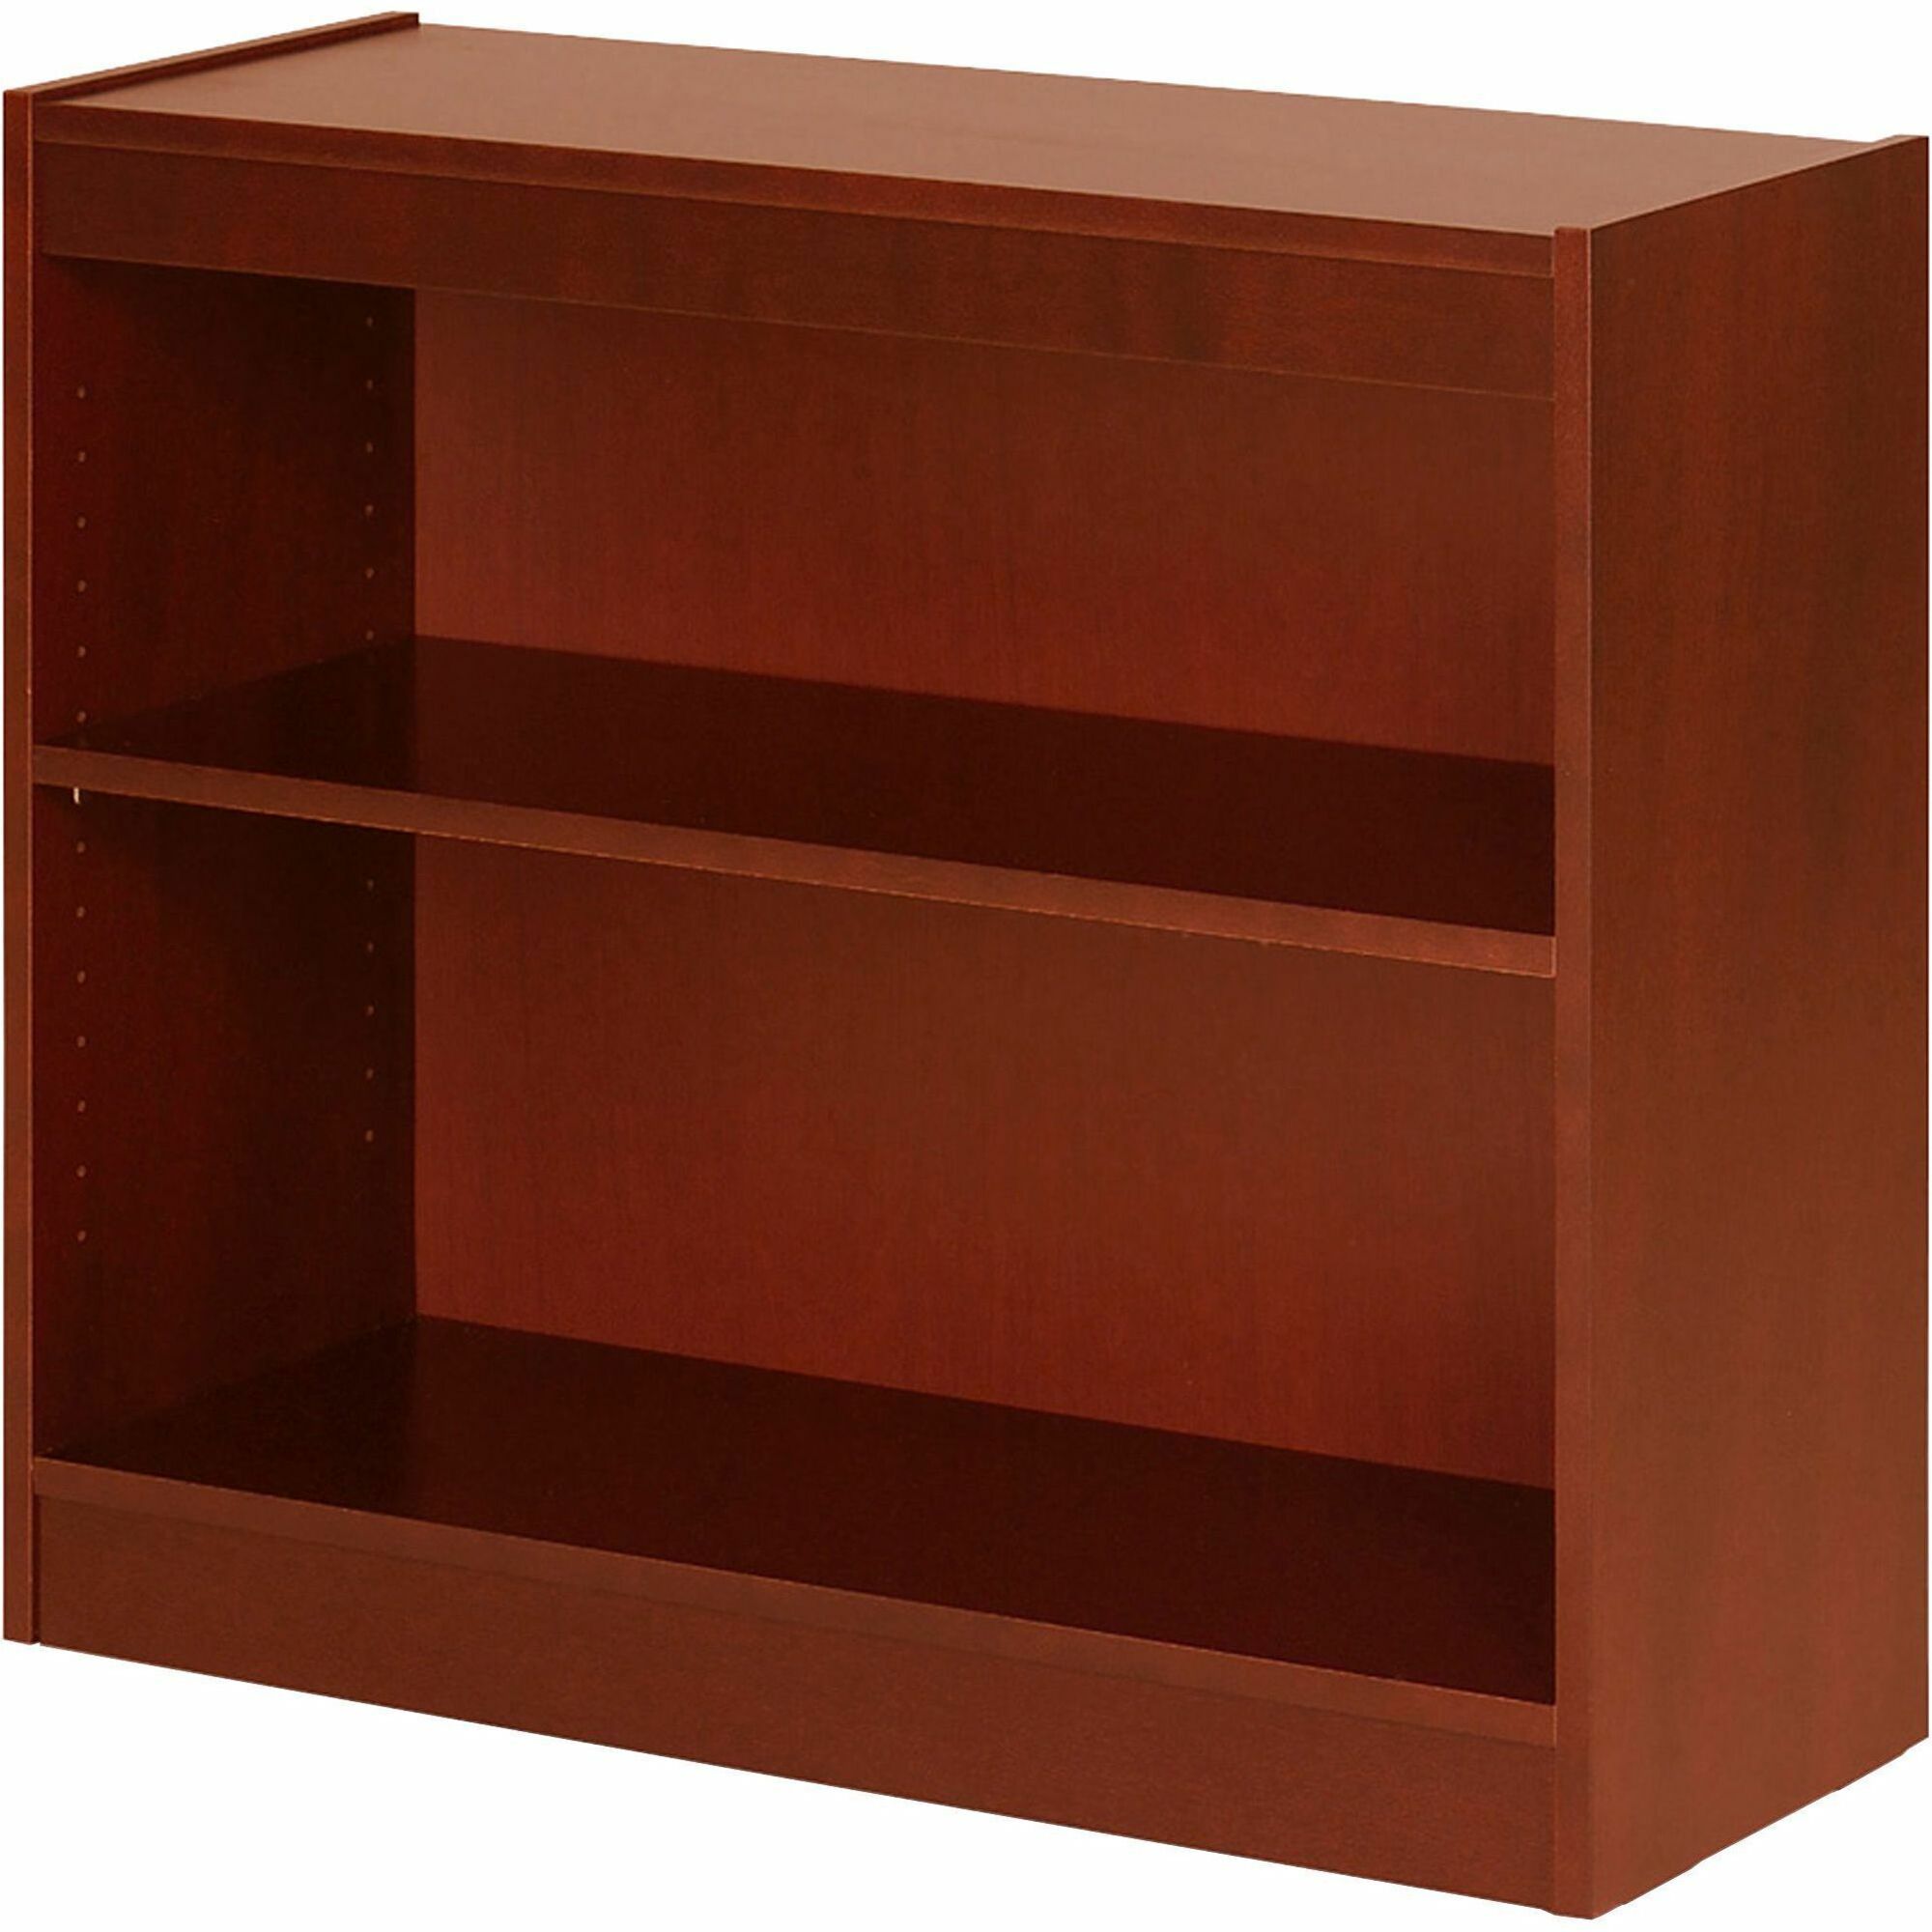 Lorell Panel End Hardwood Veneer Bookcase - 36" x 12" x 0.8" x 30" - 2 Shelve(s) - 1 Adjustable Shelf(ves) - Material: Veneer - Finish: Cherry - 